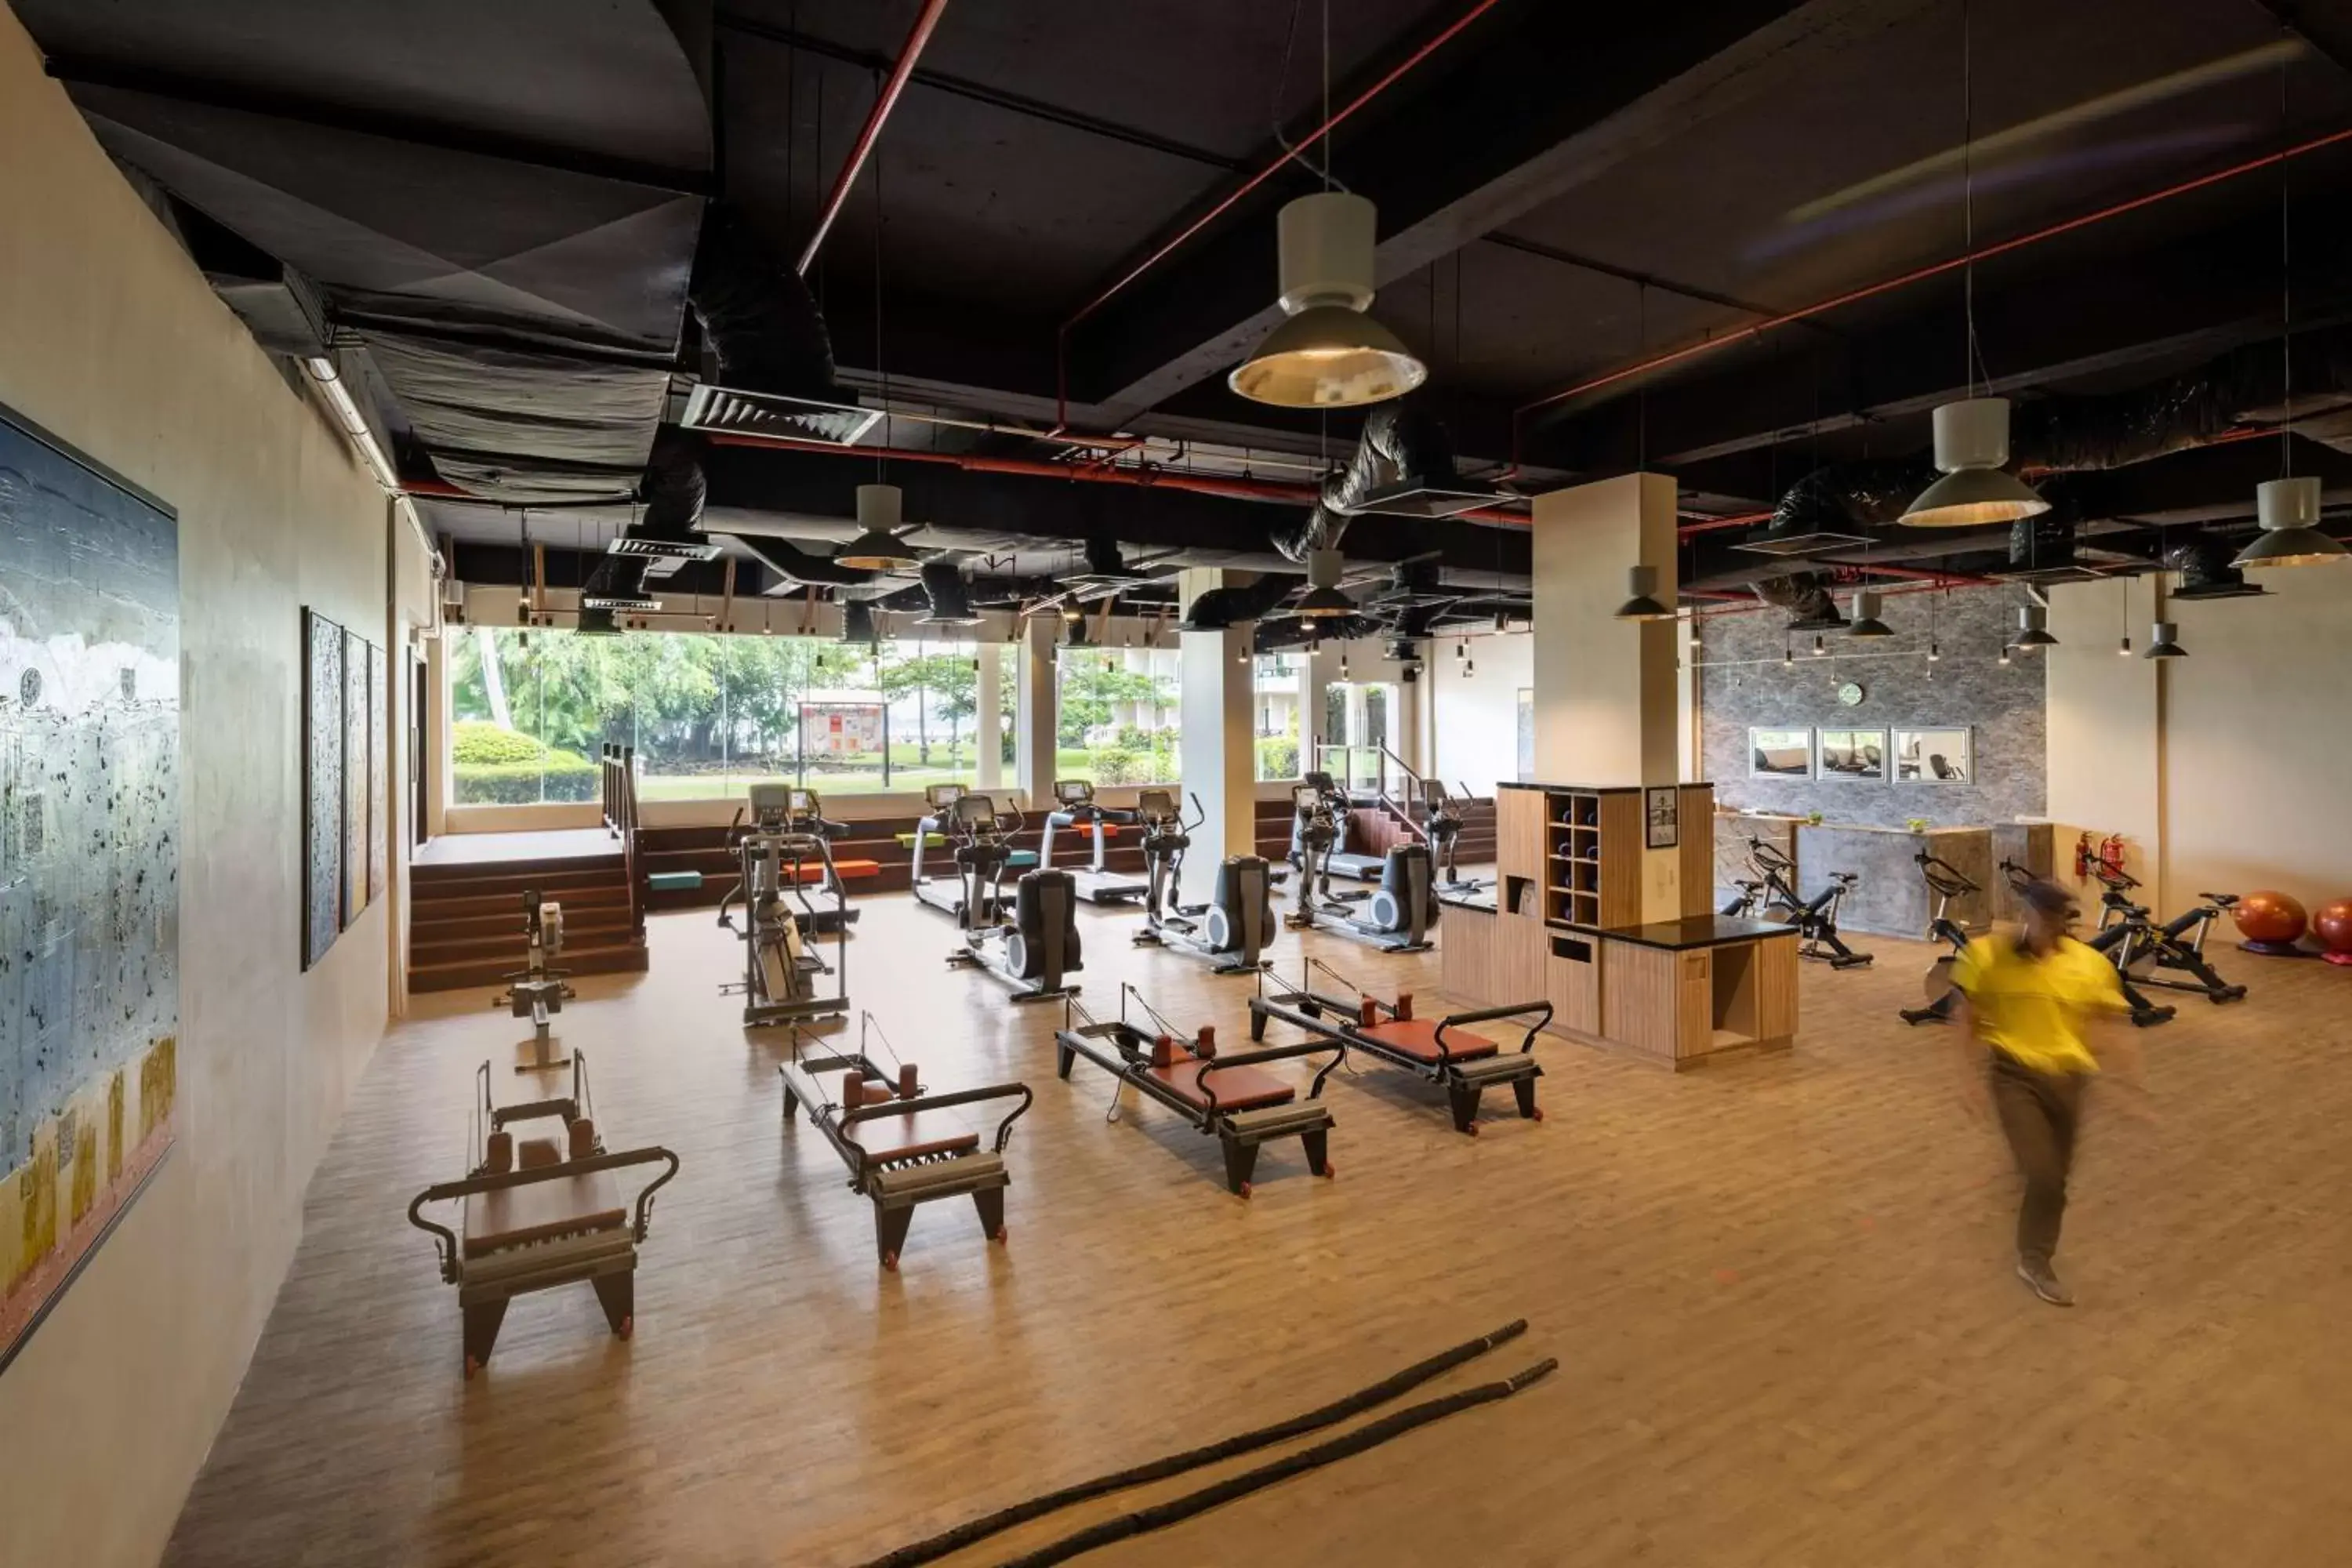 Fitness centre/facilities, Fitness Center/Facilities in Shangri-La Tanjung Aru, Kota Kinabalu